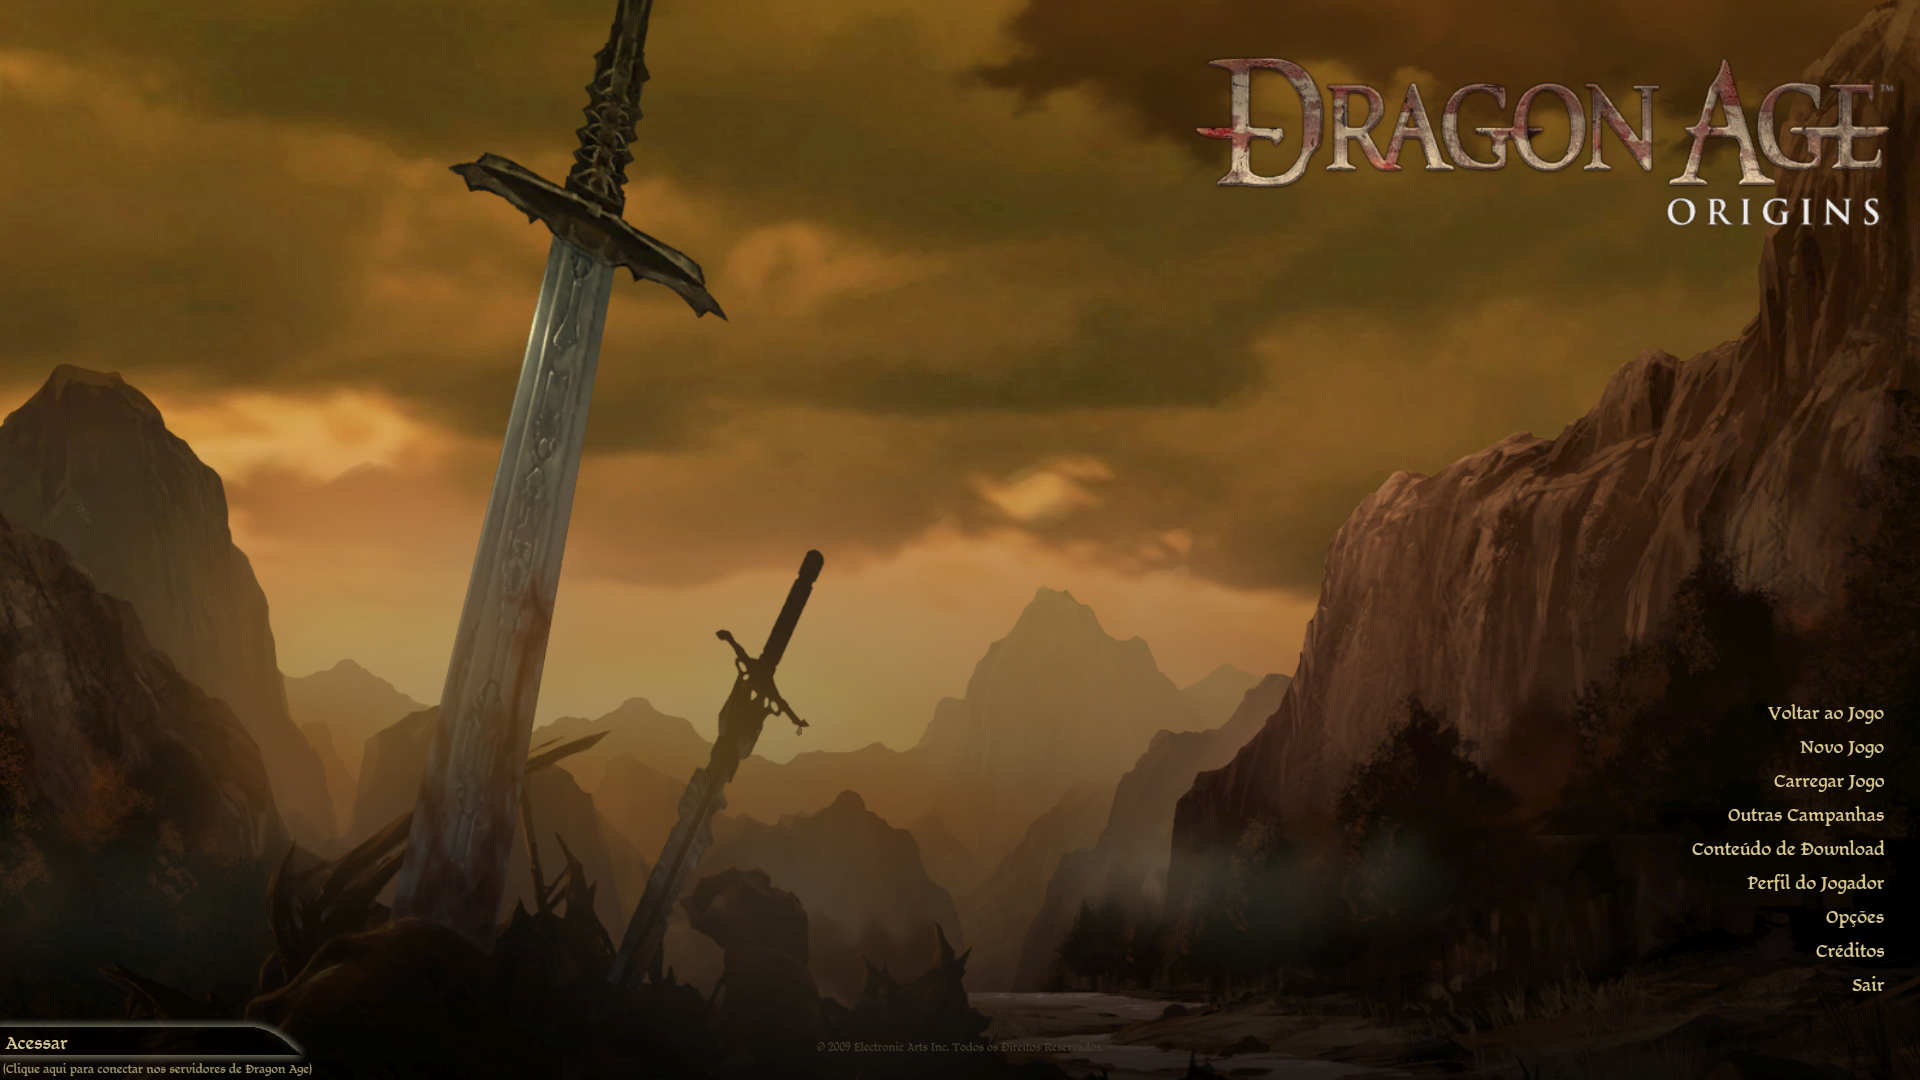 Tradução BR Dragon Age Origins download